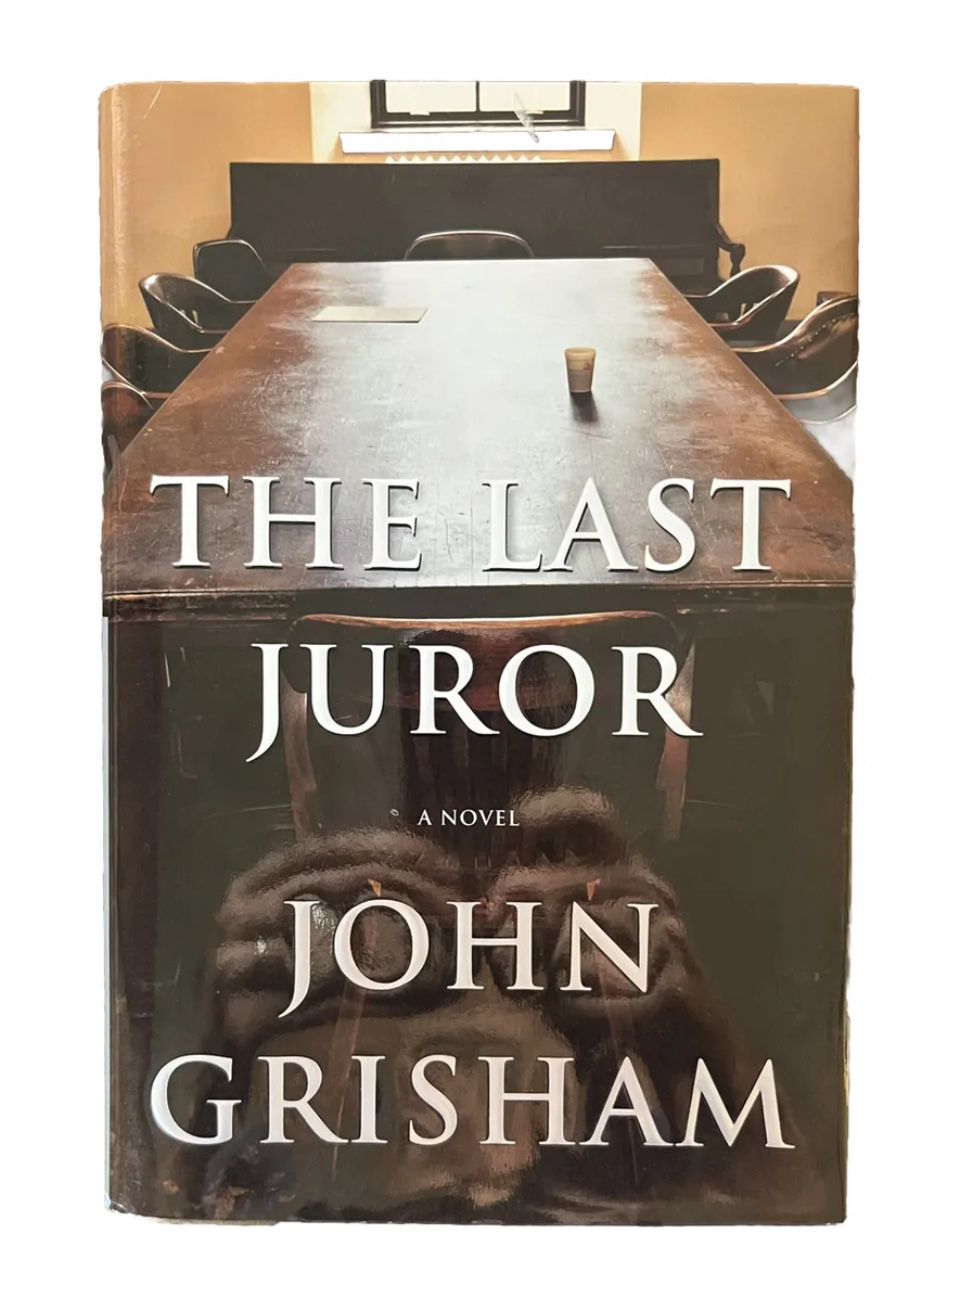 The Last Juror by John Grisham 2004 First Edition Hardcover Book Novel